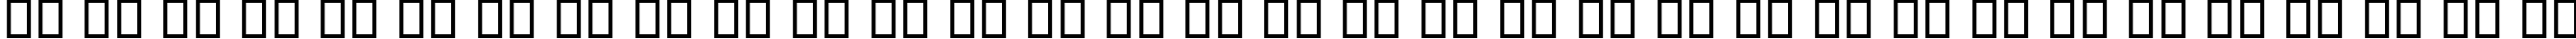 Пример написания русского алфавита шрифтом B Traffic